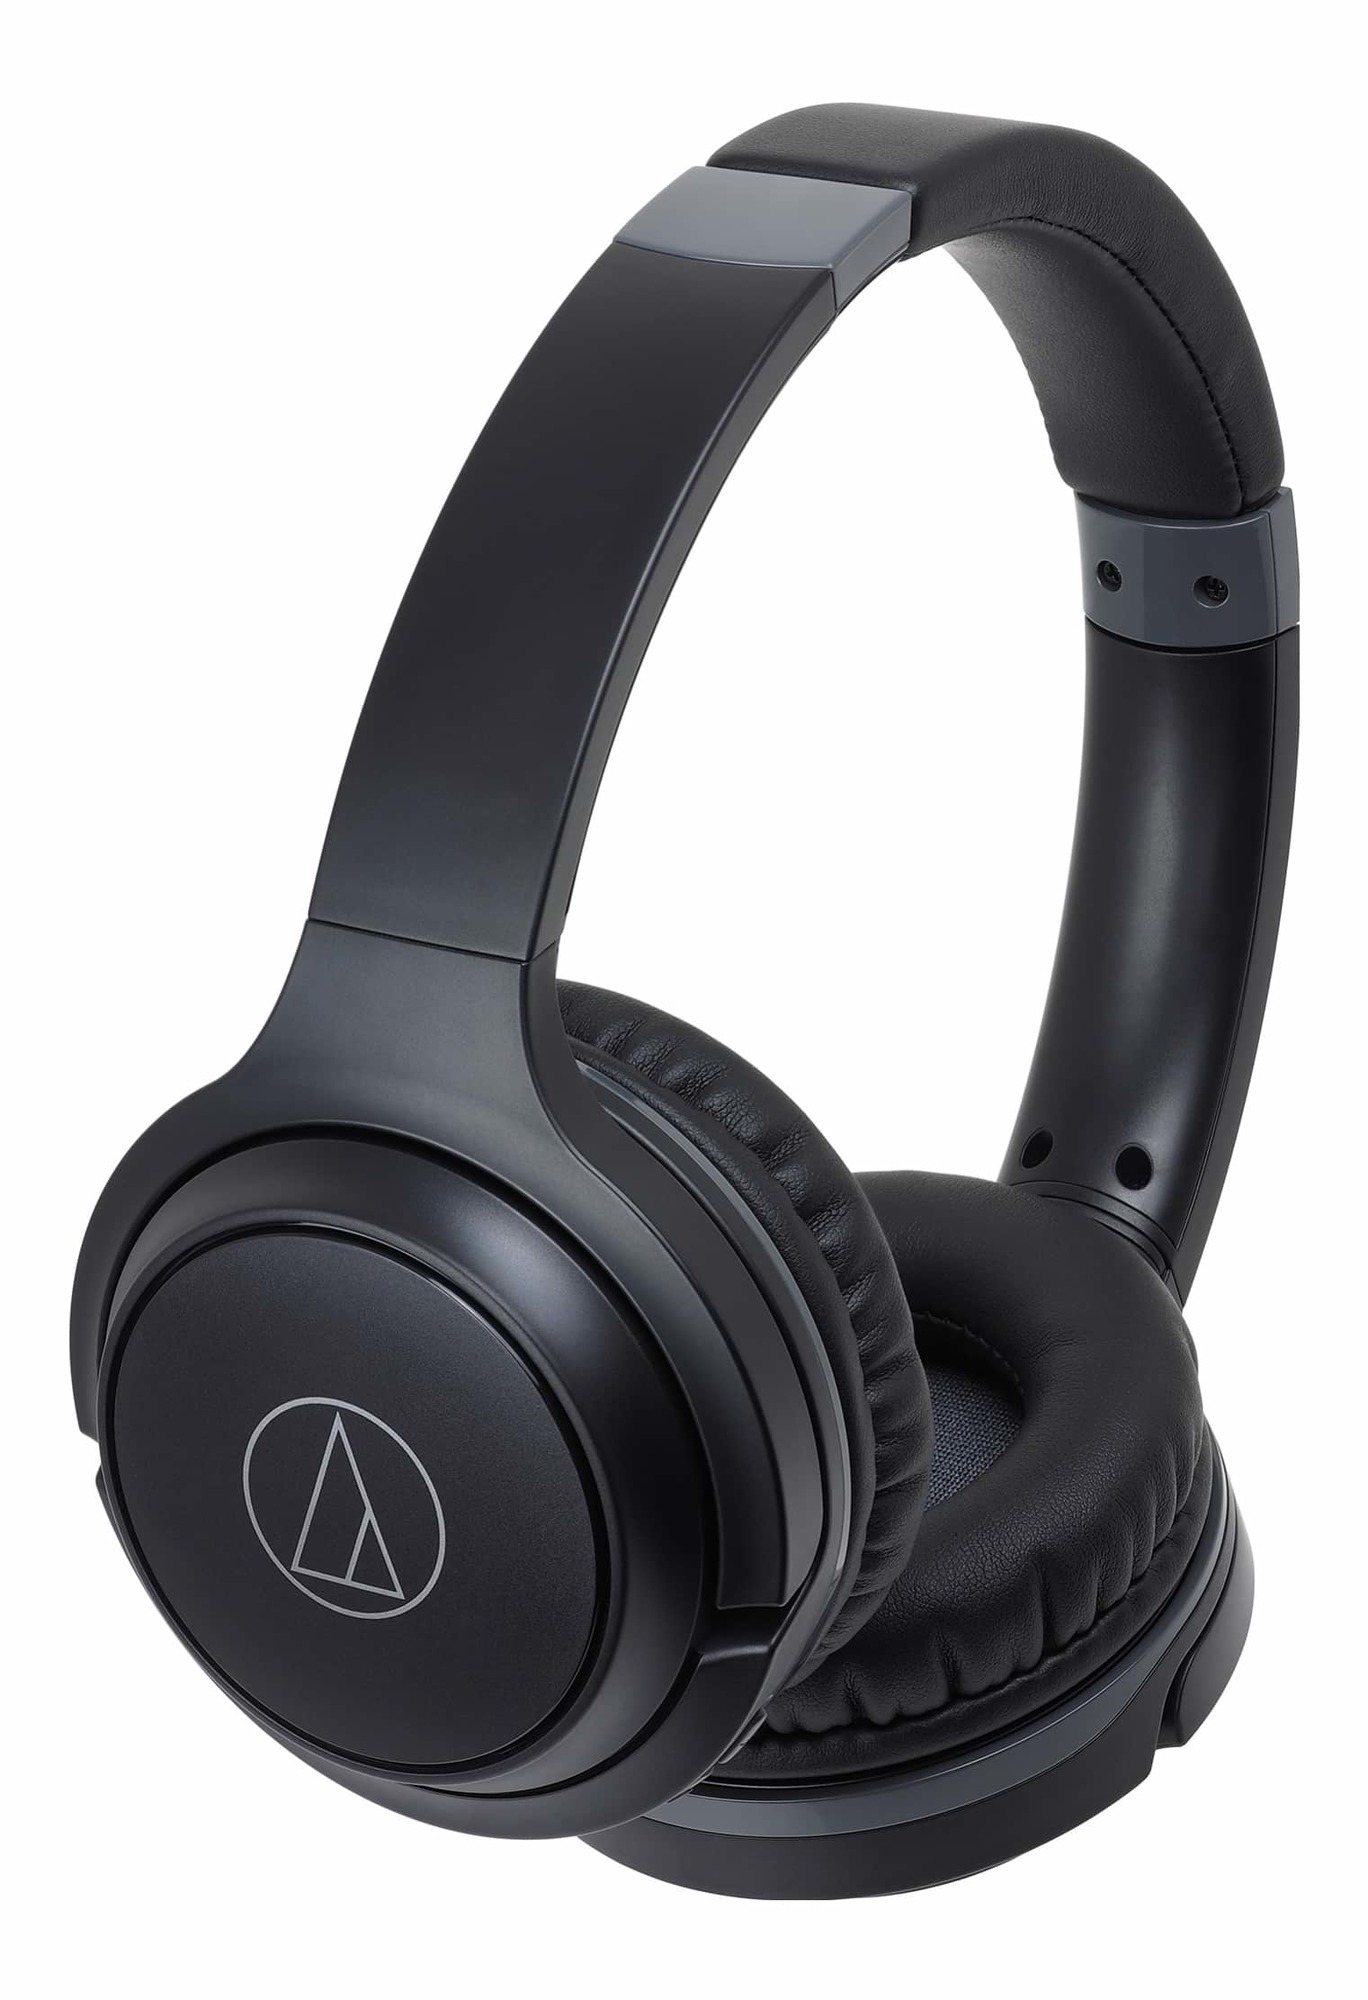 Audio Technica ATH-S200BT Bluetooth Wireless On-Ear Headphones Black